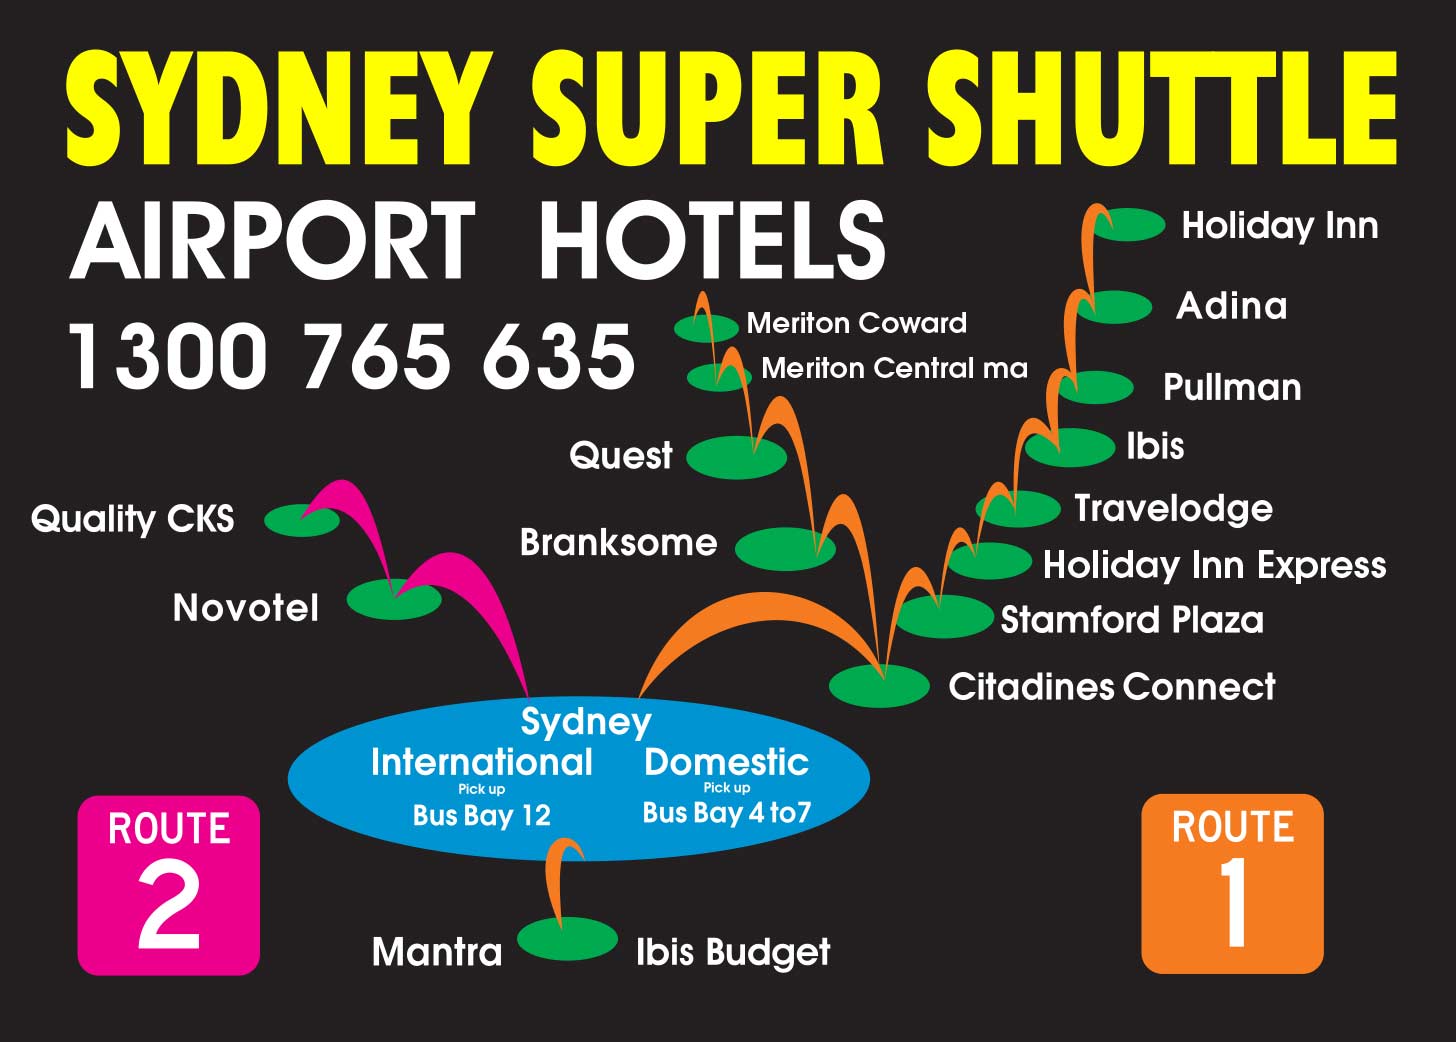 Airport Hotels Shuttle Service Sydney Super Shuttle